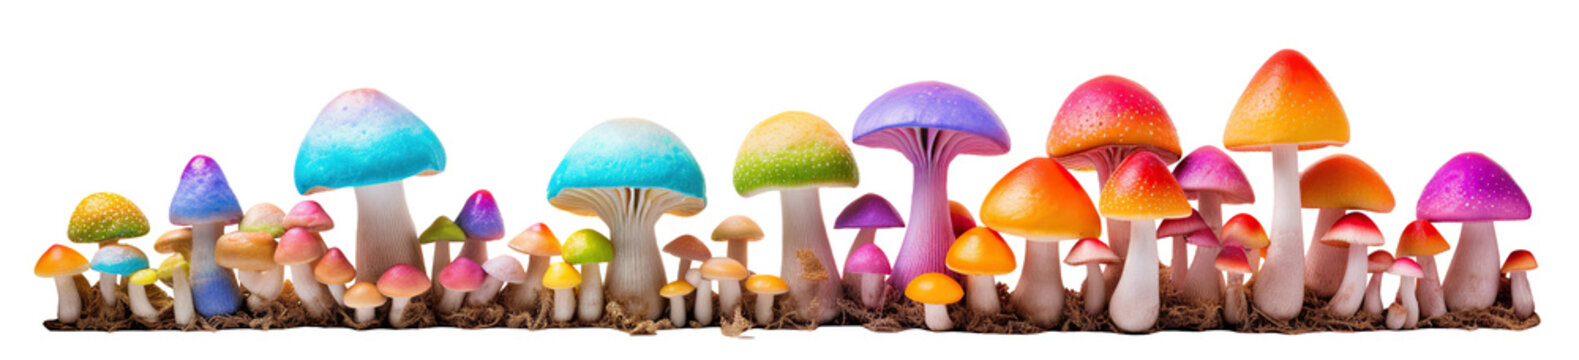 Multicolored hallucinogenic mushrooms, cut out